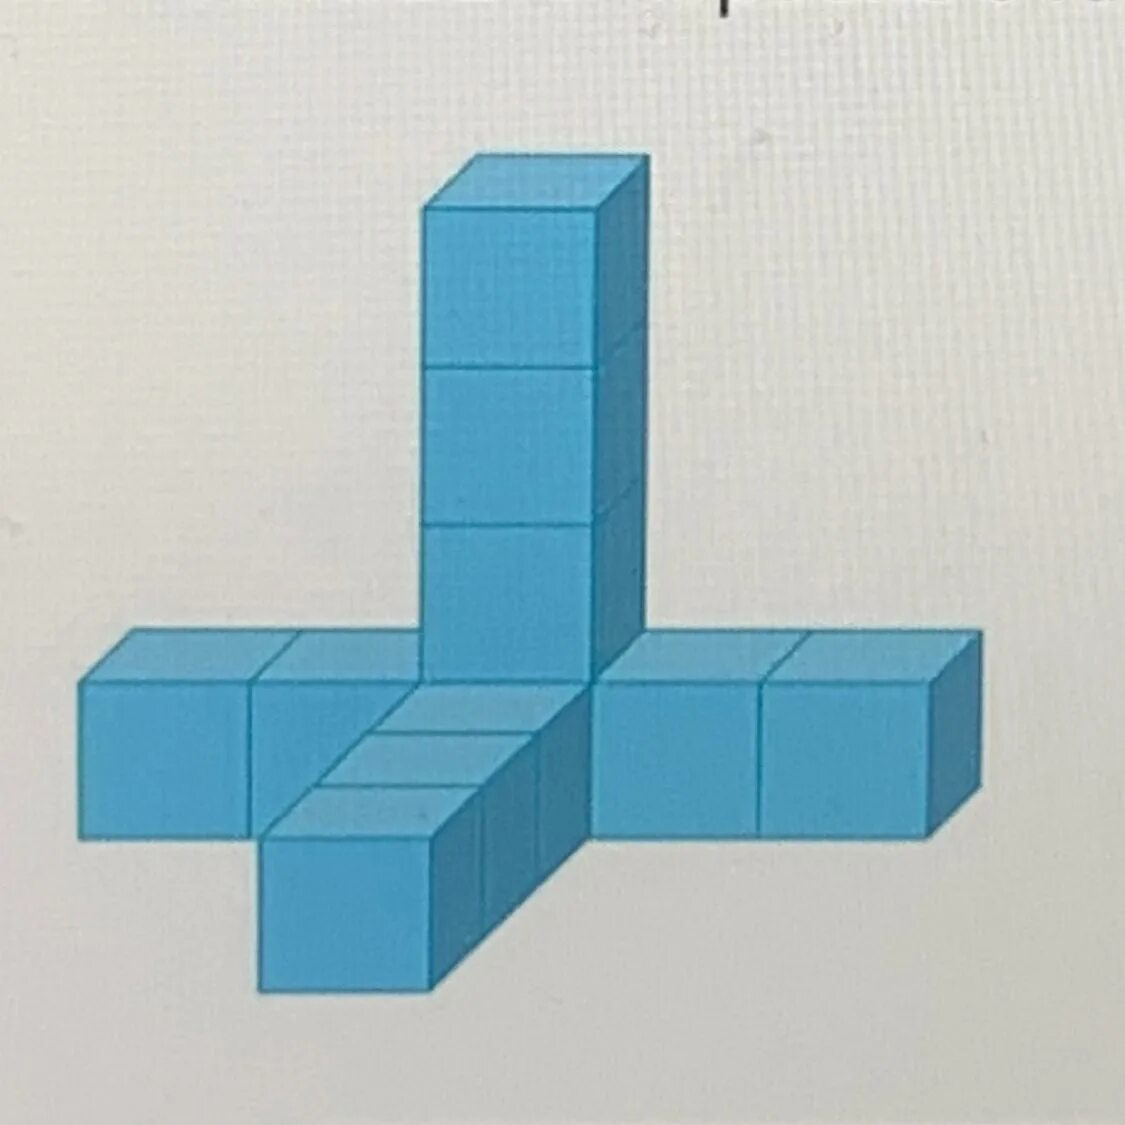 Фигуры из кубиков. Фигуры из одинаковых кубиков. Фигуру из одинаковых кубиков поместили в коробку. Изобразить фигуру из кубиков.